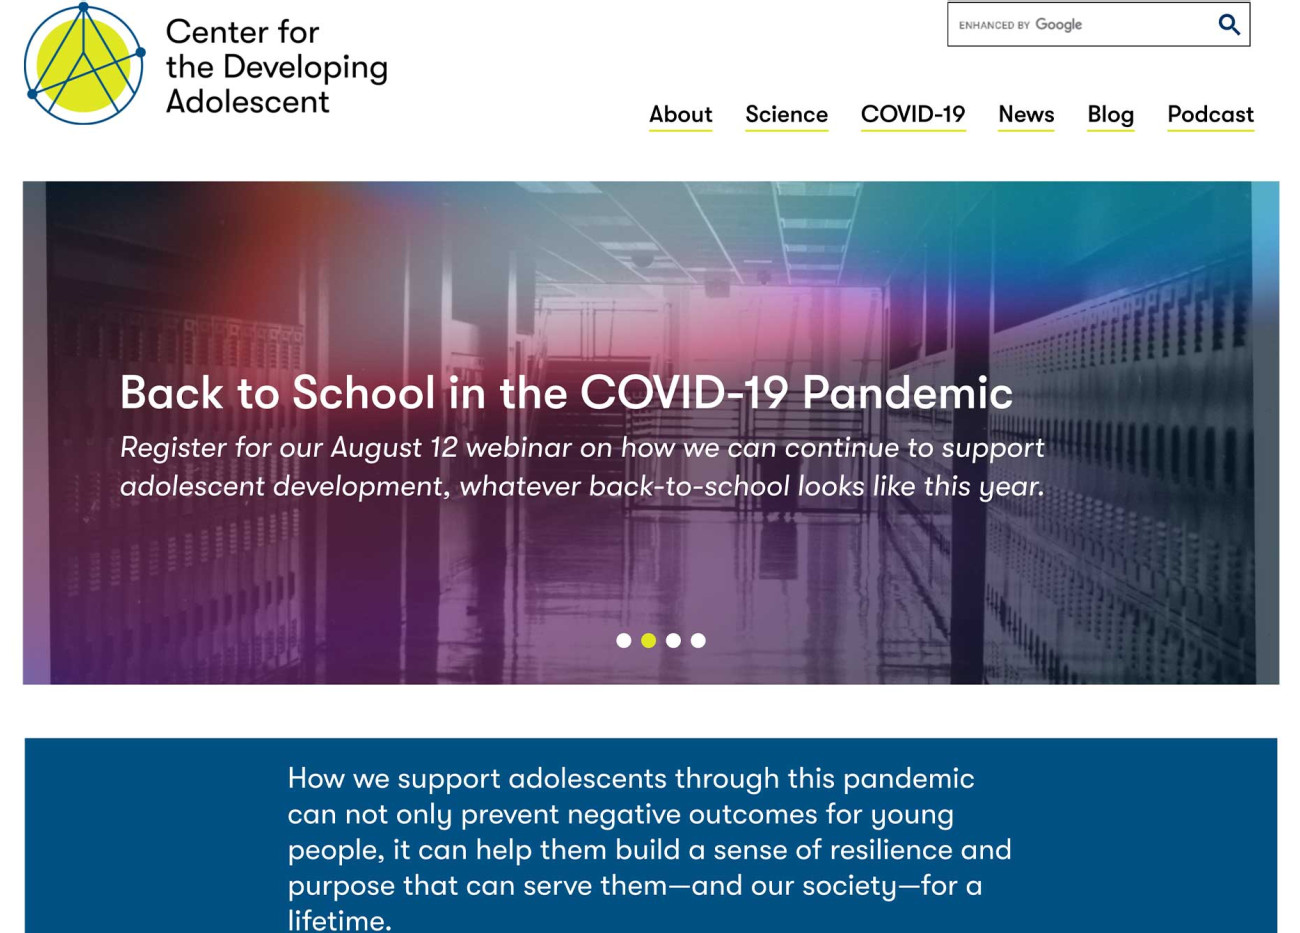 Screenshot of the CDA website home page